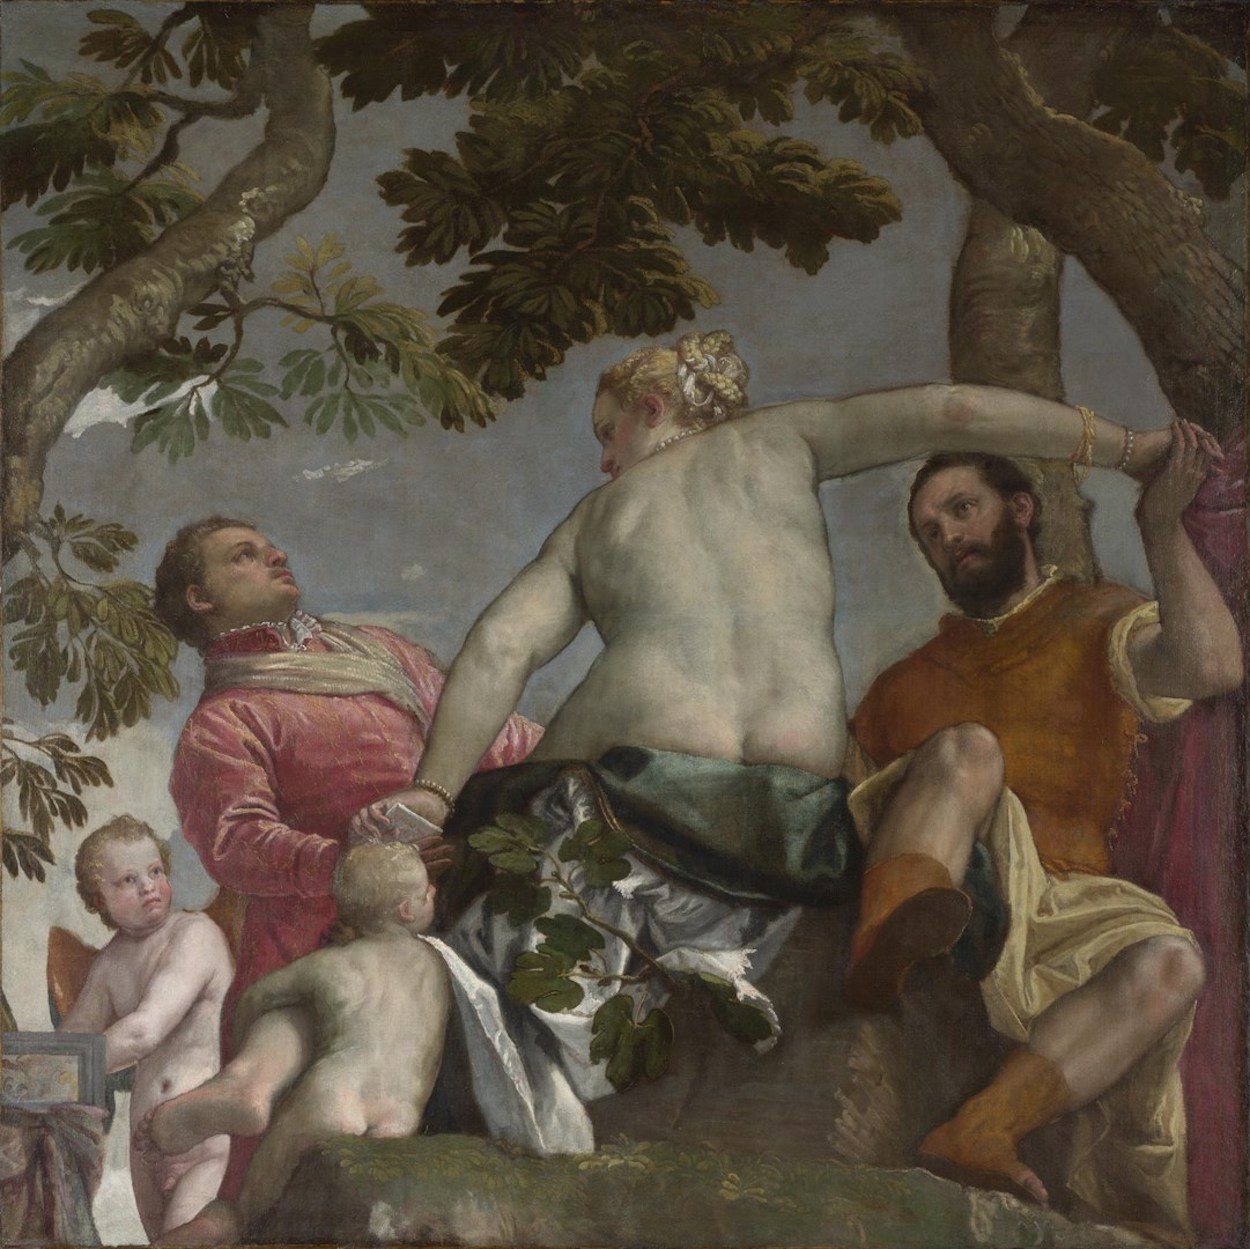 Untreue by Paolo Veronese - um 1575 - 189.9 x 189.9 cm National Gallery